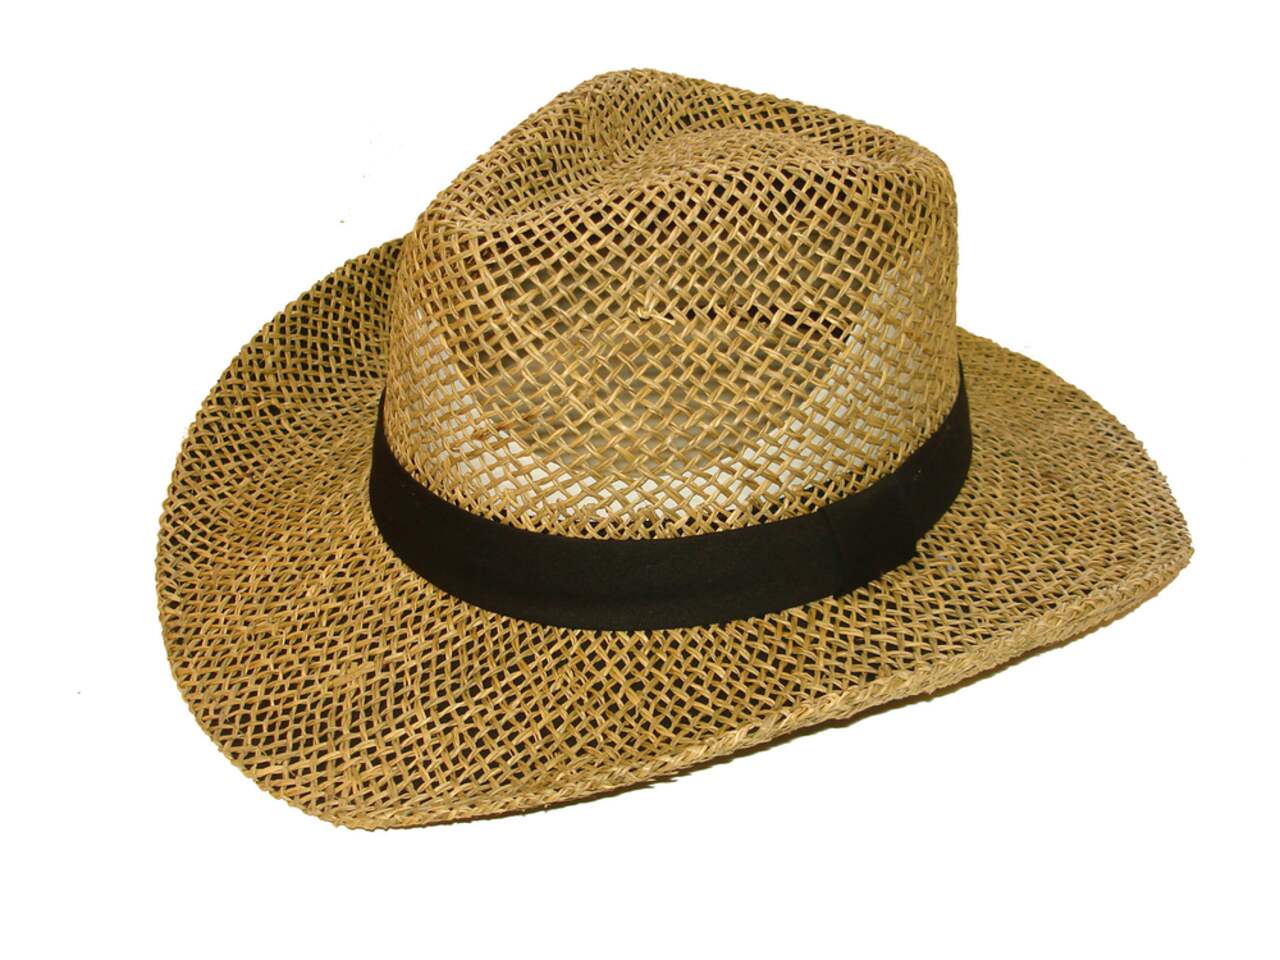 Men's Wide Brim Straw Hat, Tan